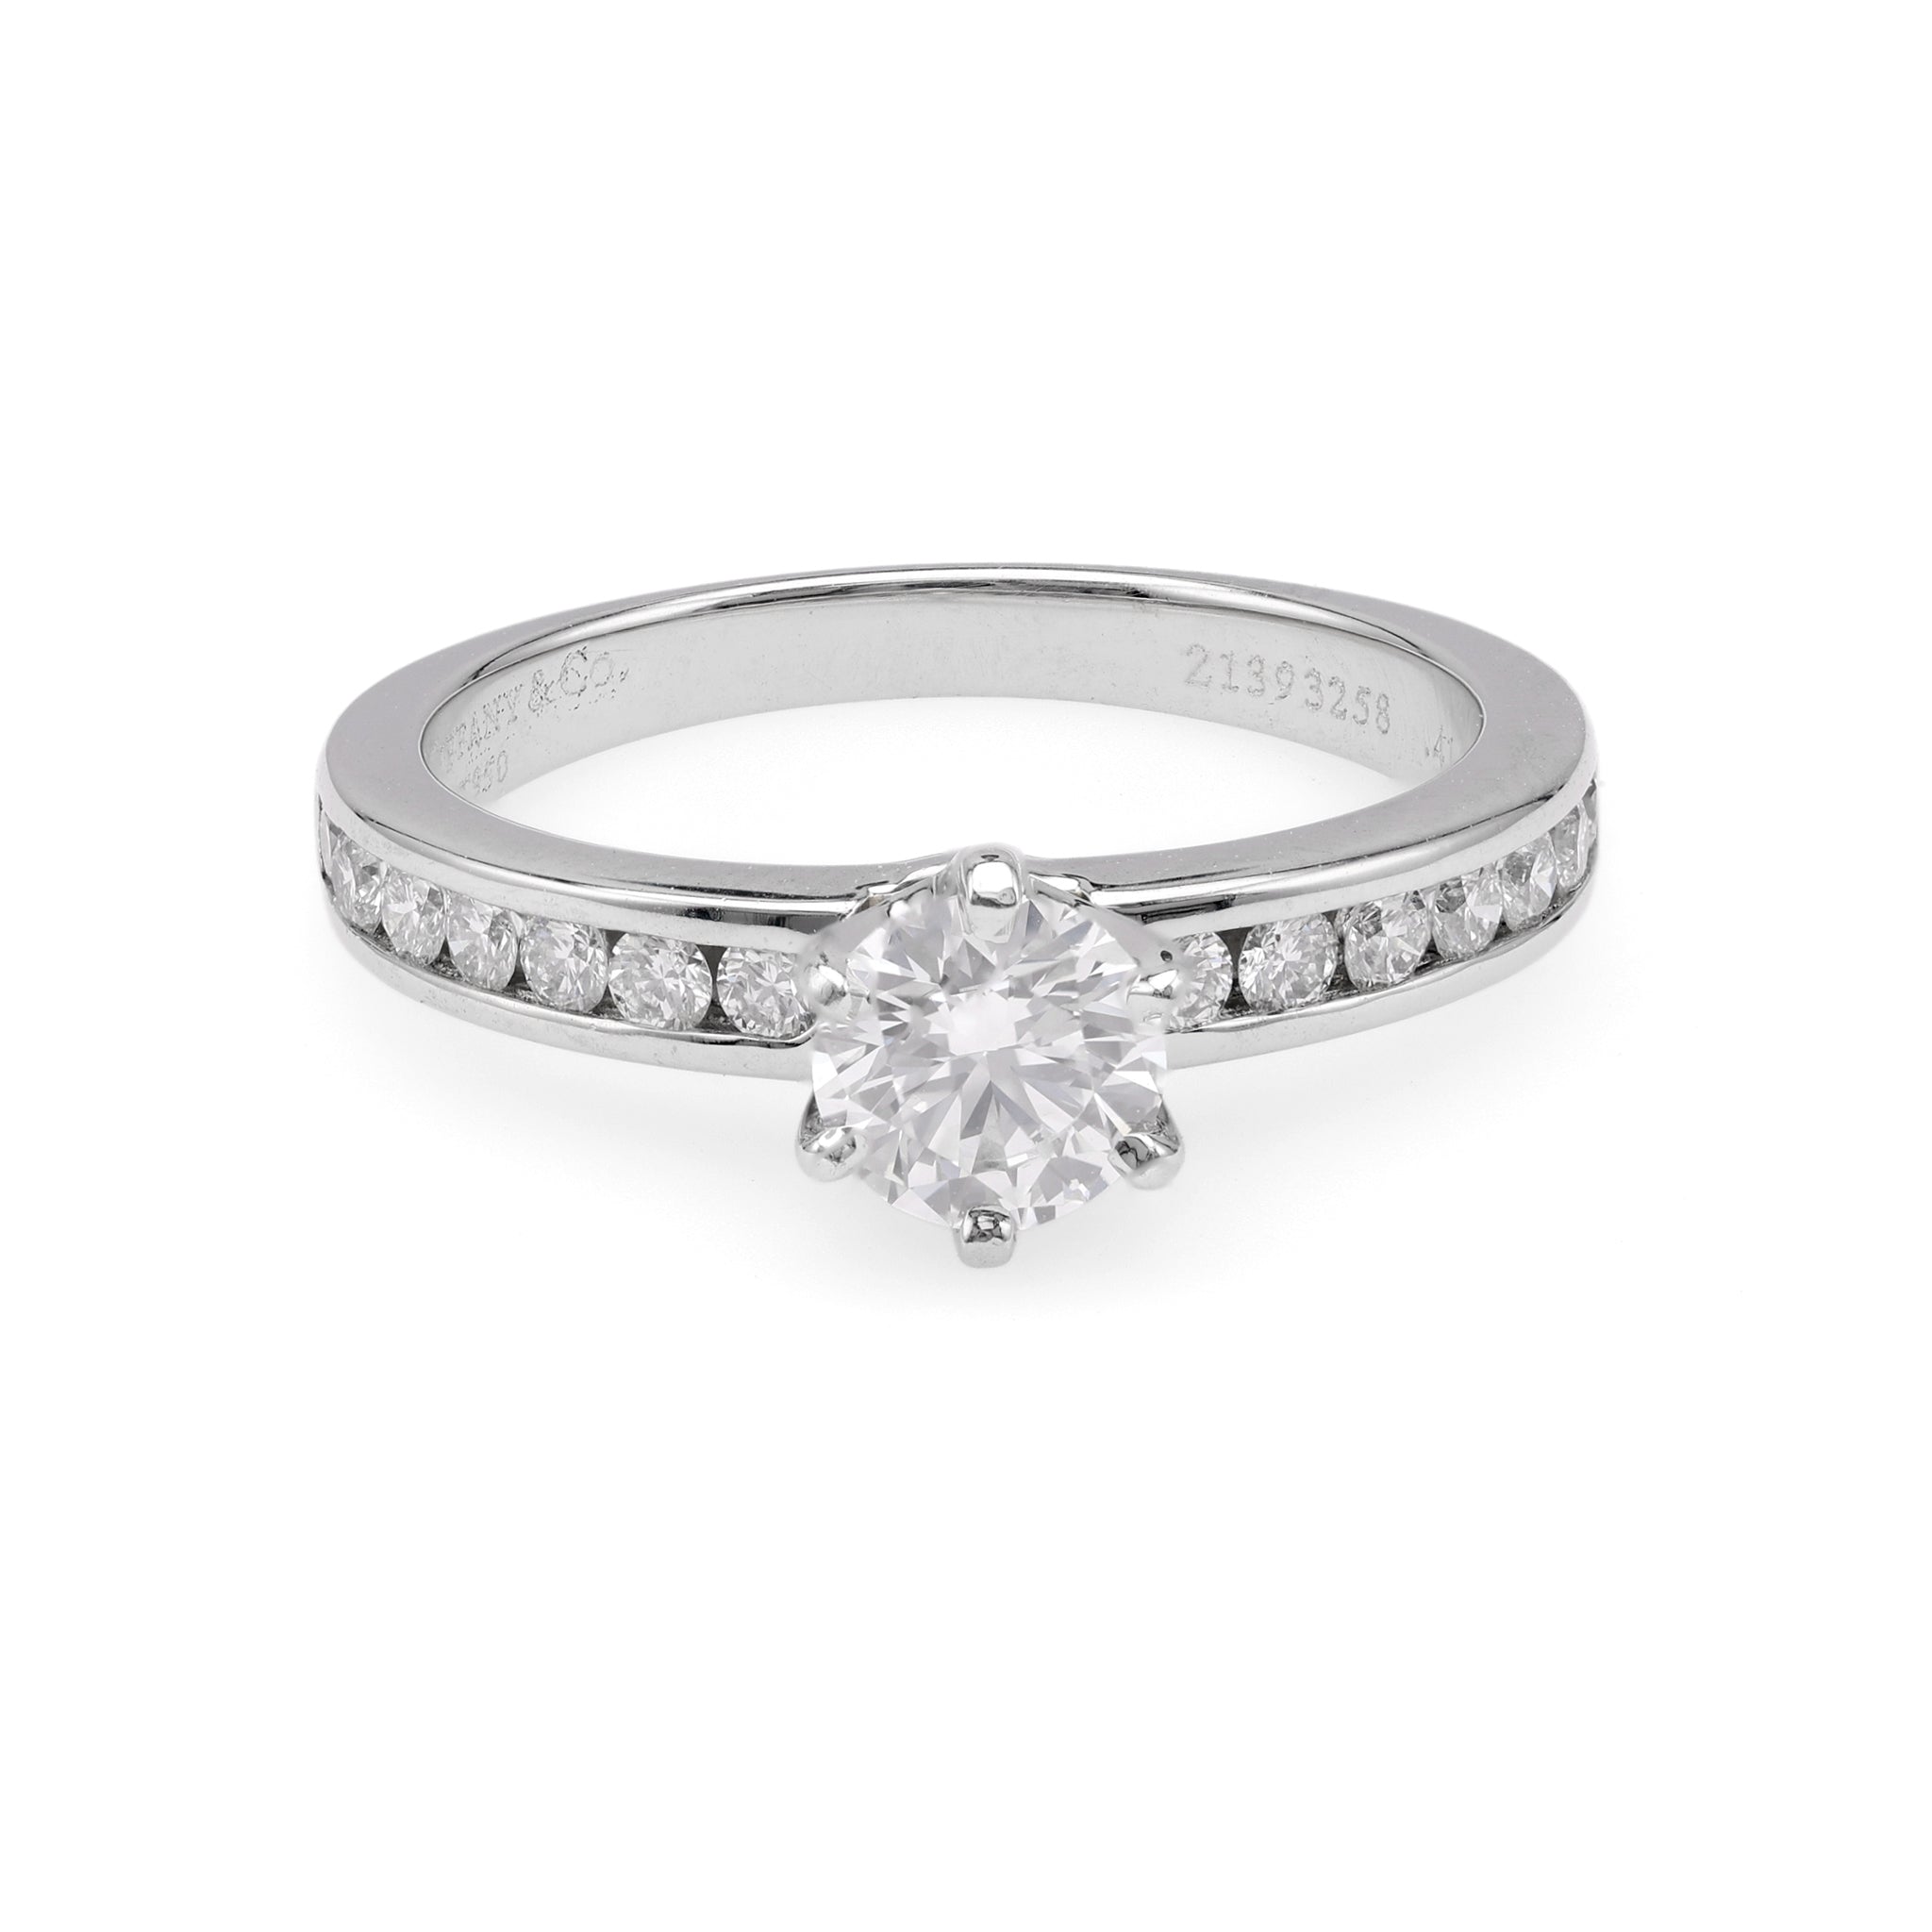 Tiffany & Co. 0.41 Carat Round Brilliant Cut Diamond Platinum Ring Rings Jack Weir & Sons   